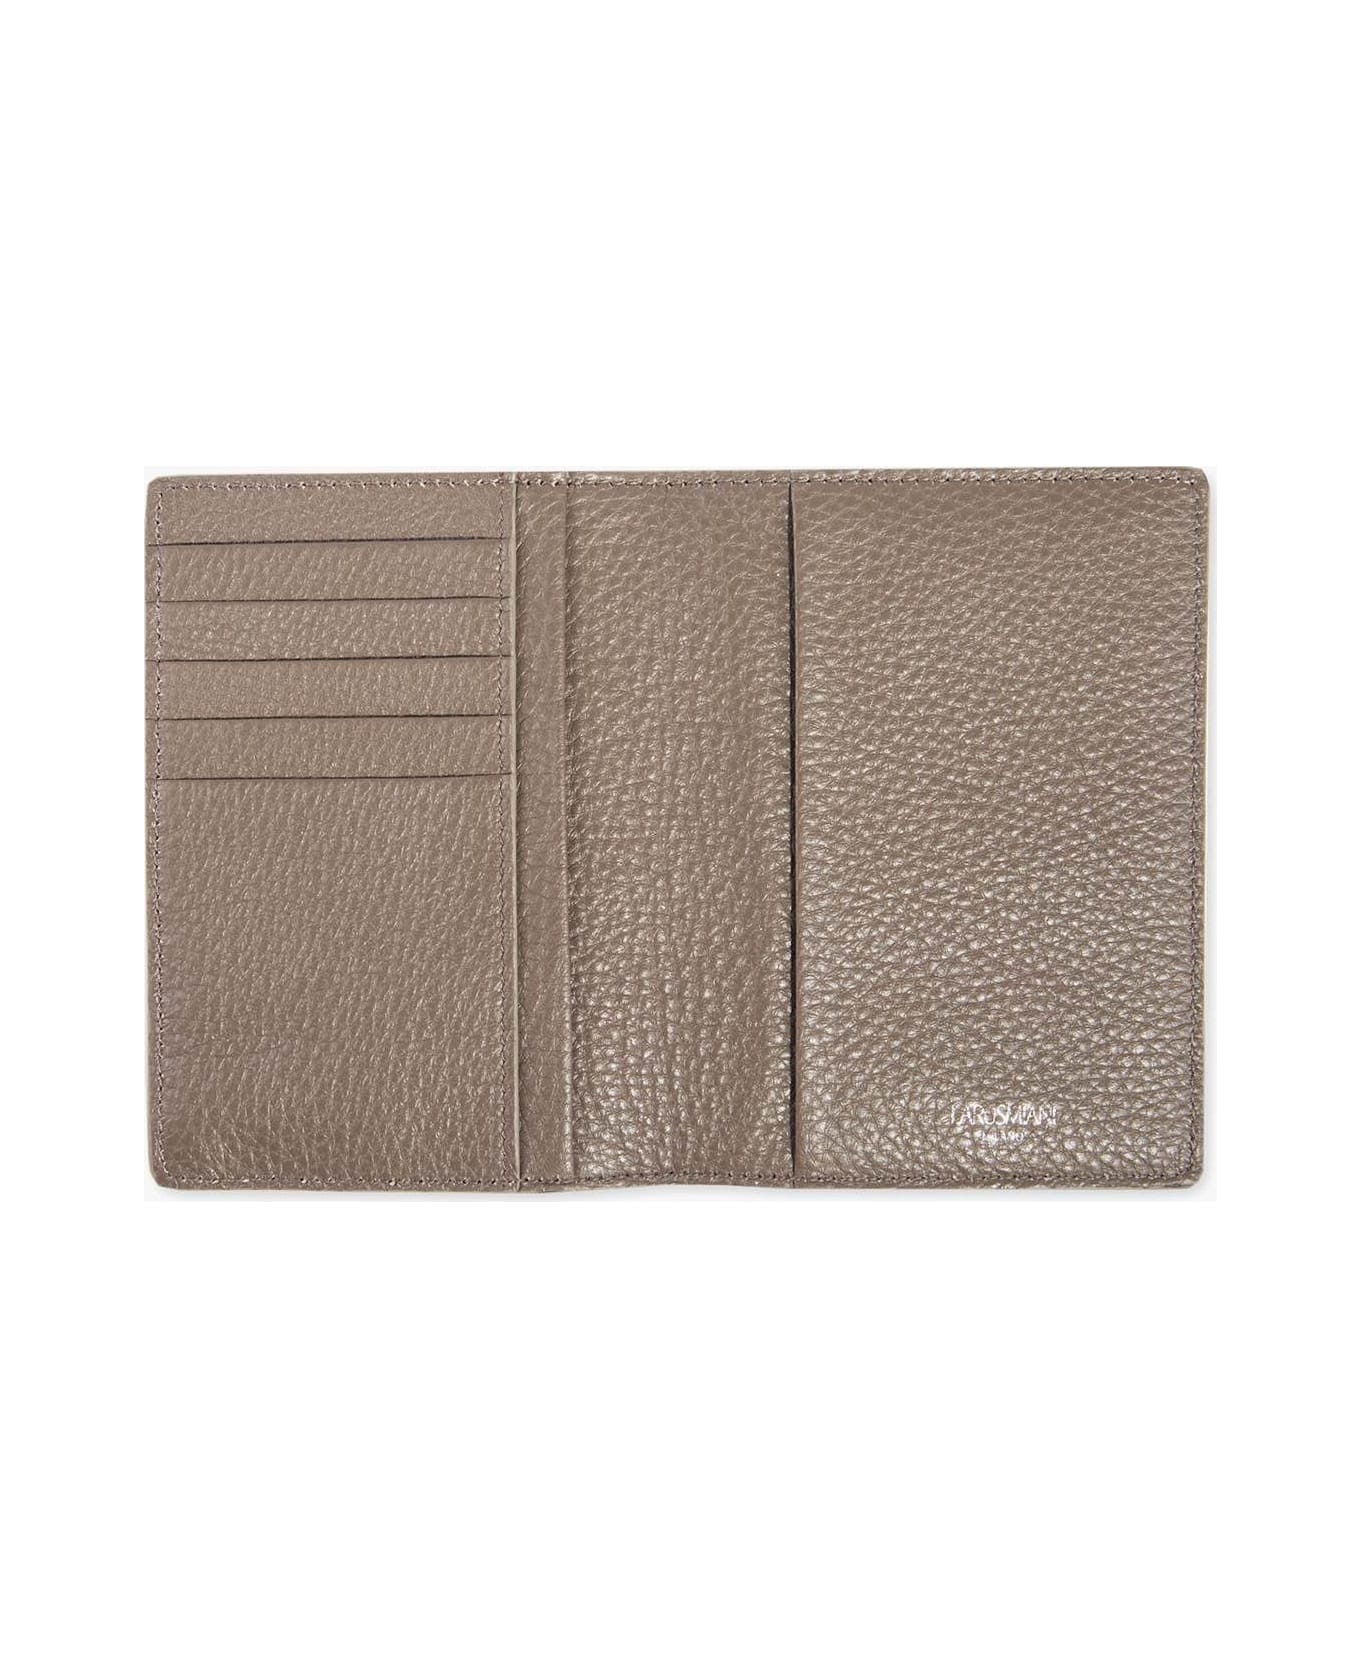 Larusmiani Passport Cover 'fiumicino' Wallet - Brown 財布